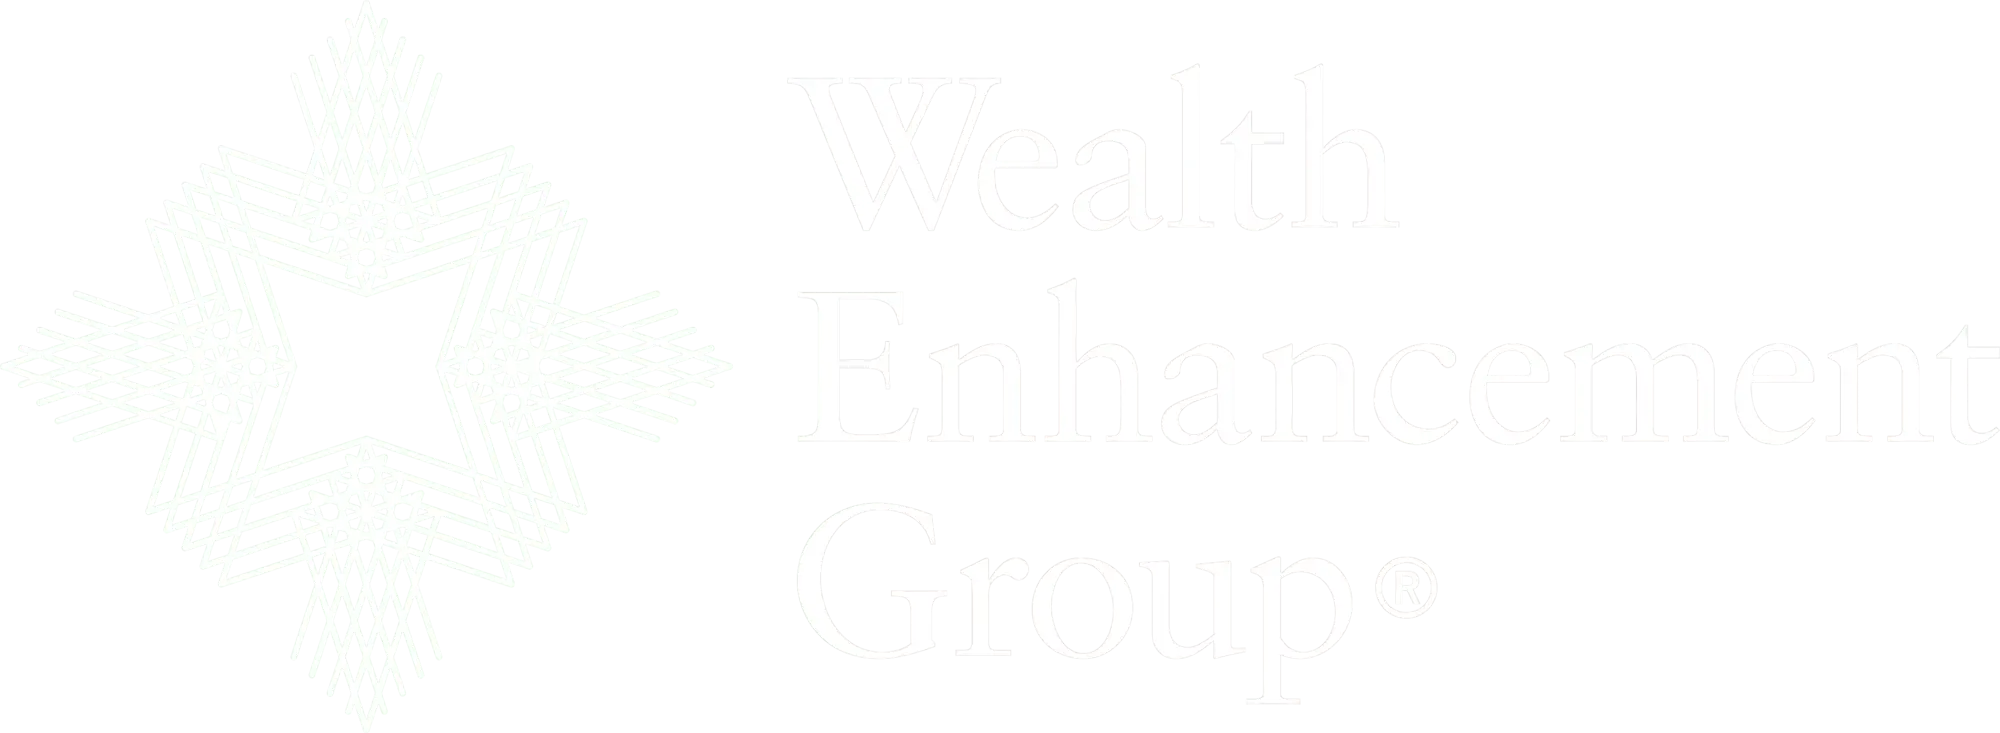 Wealth enhancement group logo